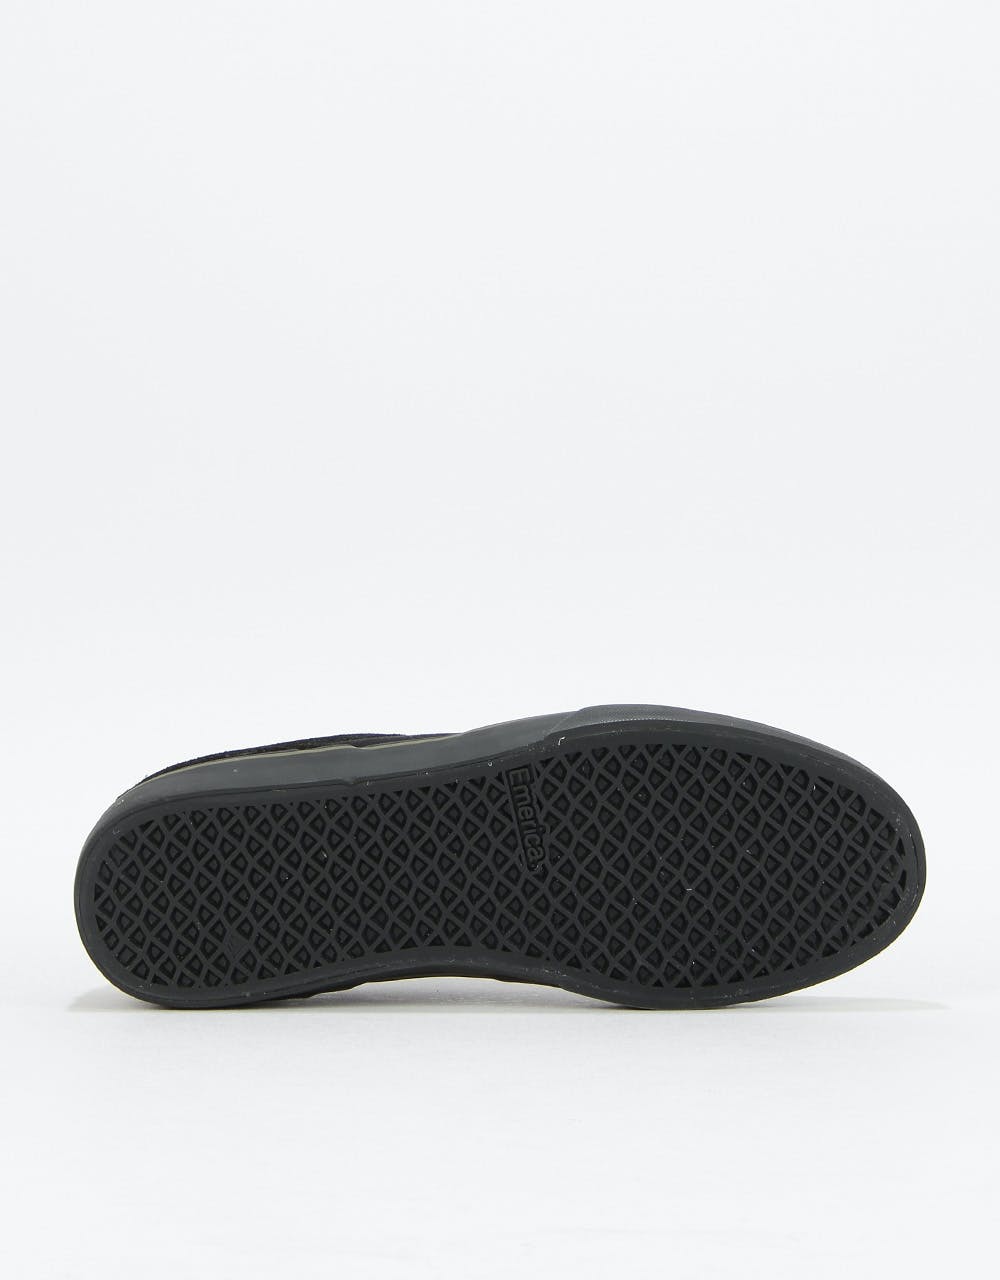 Emerica Reynolds Low Vulc Skate Shoes - Black/Olive/Black